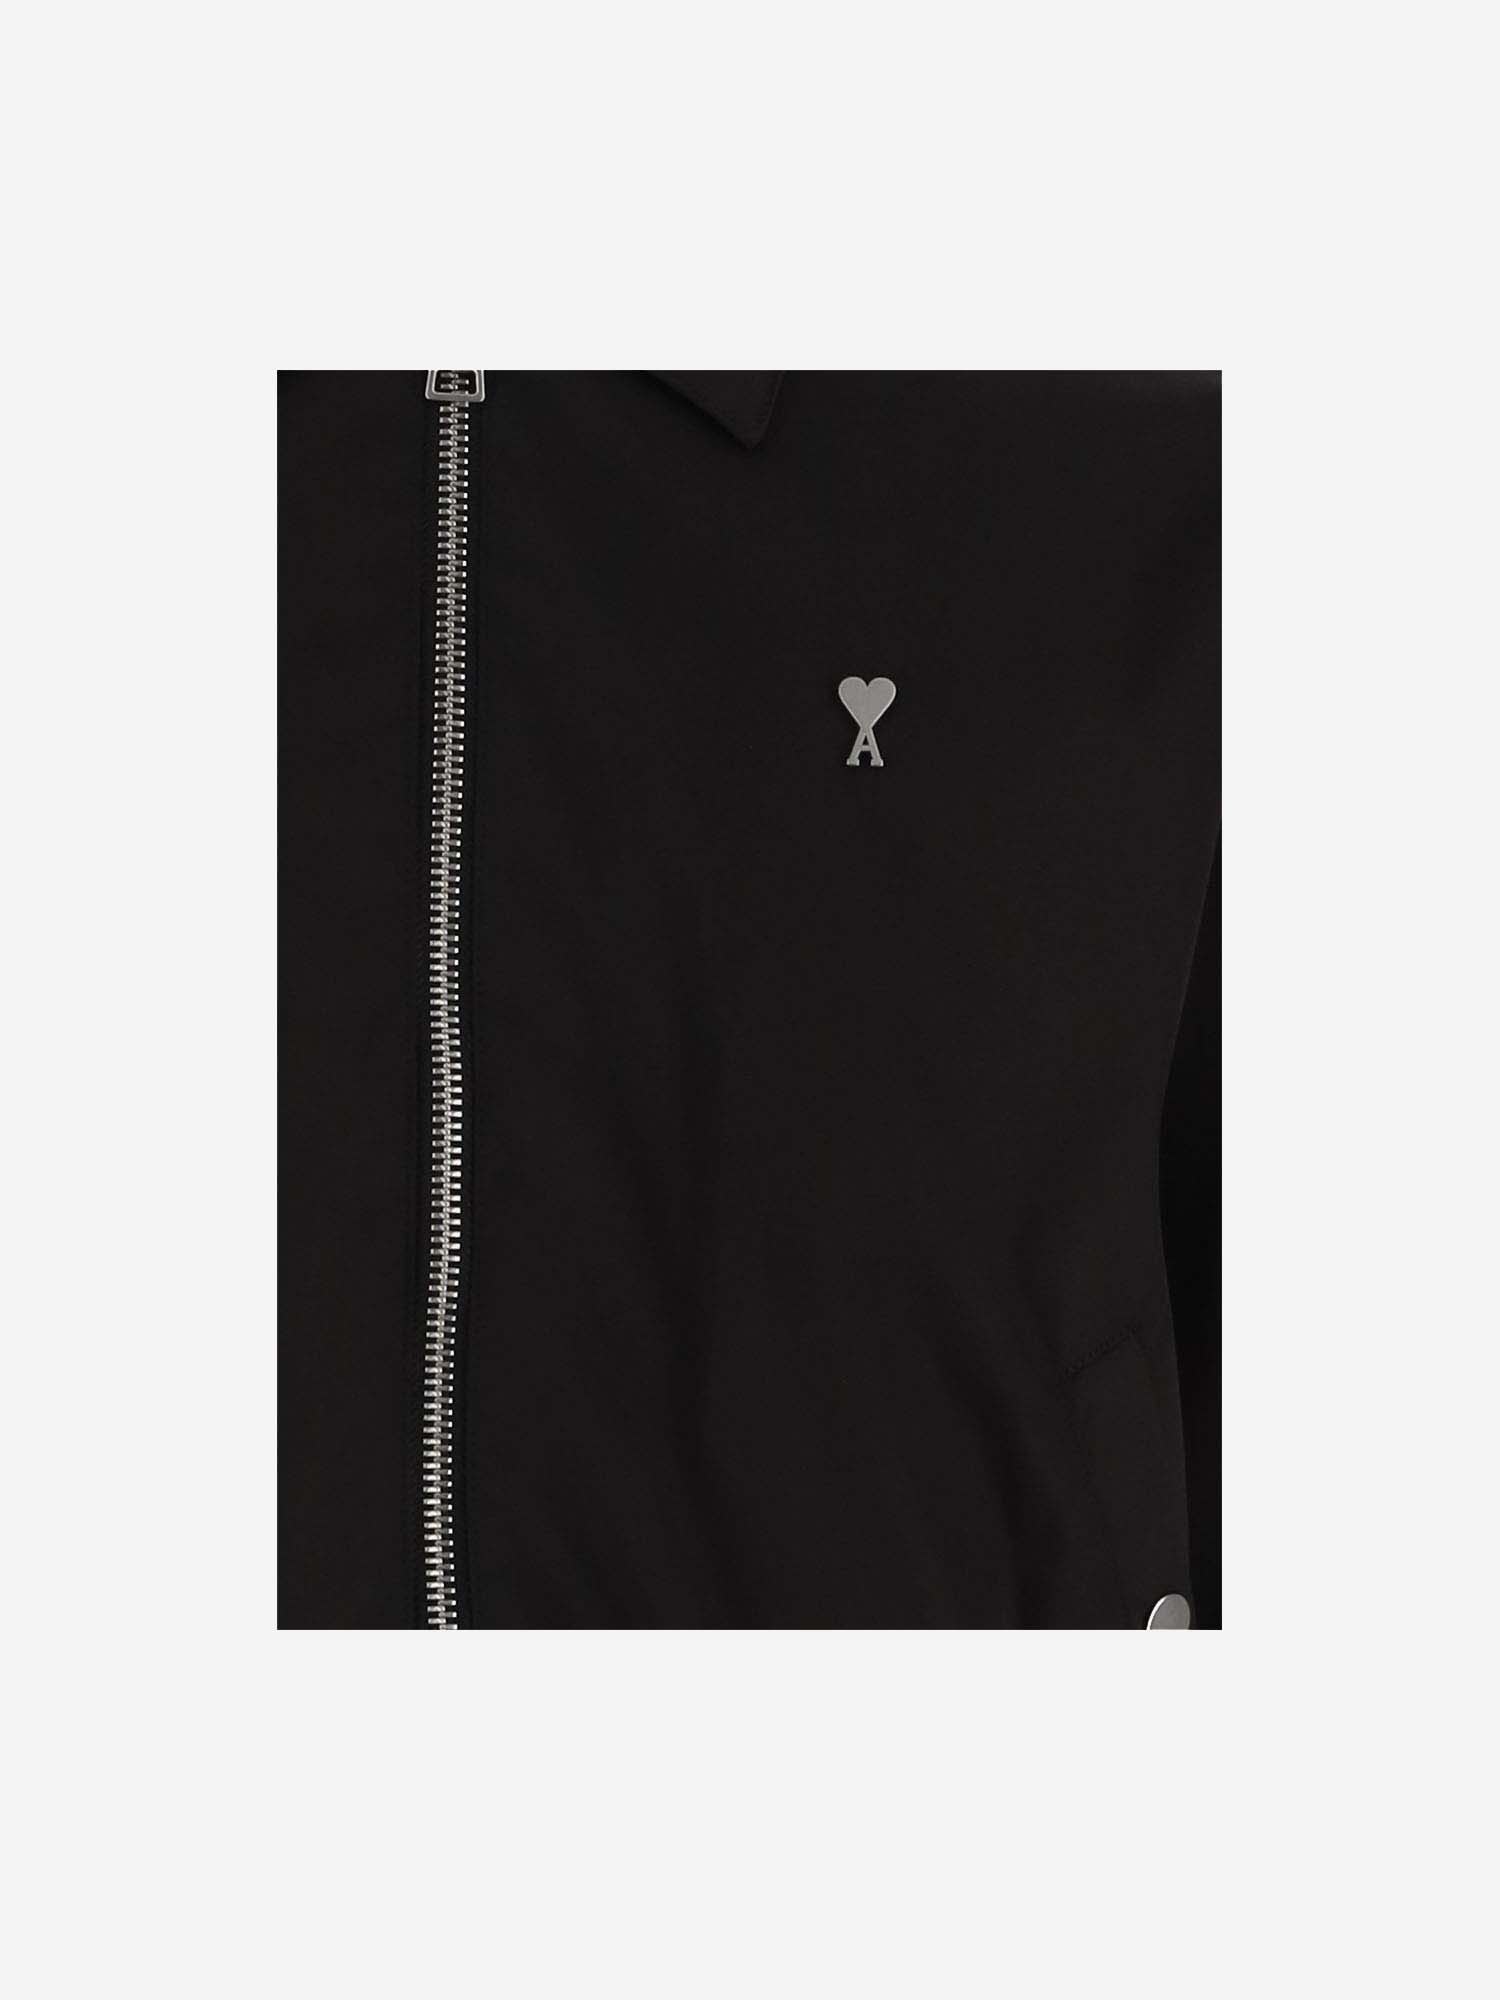 Shop Ami Alexandre Mattiussi Technical Fabric Jacket With Logo In Black